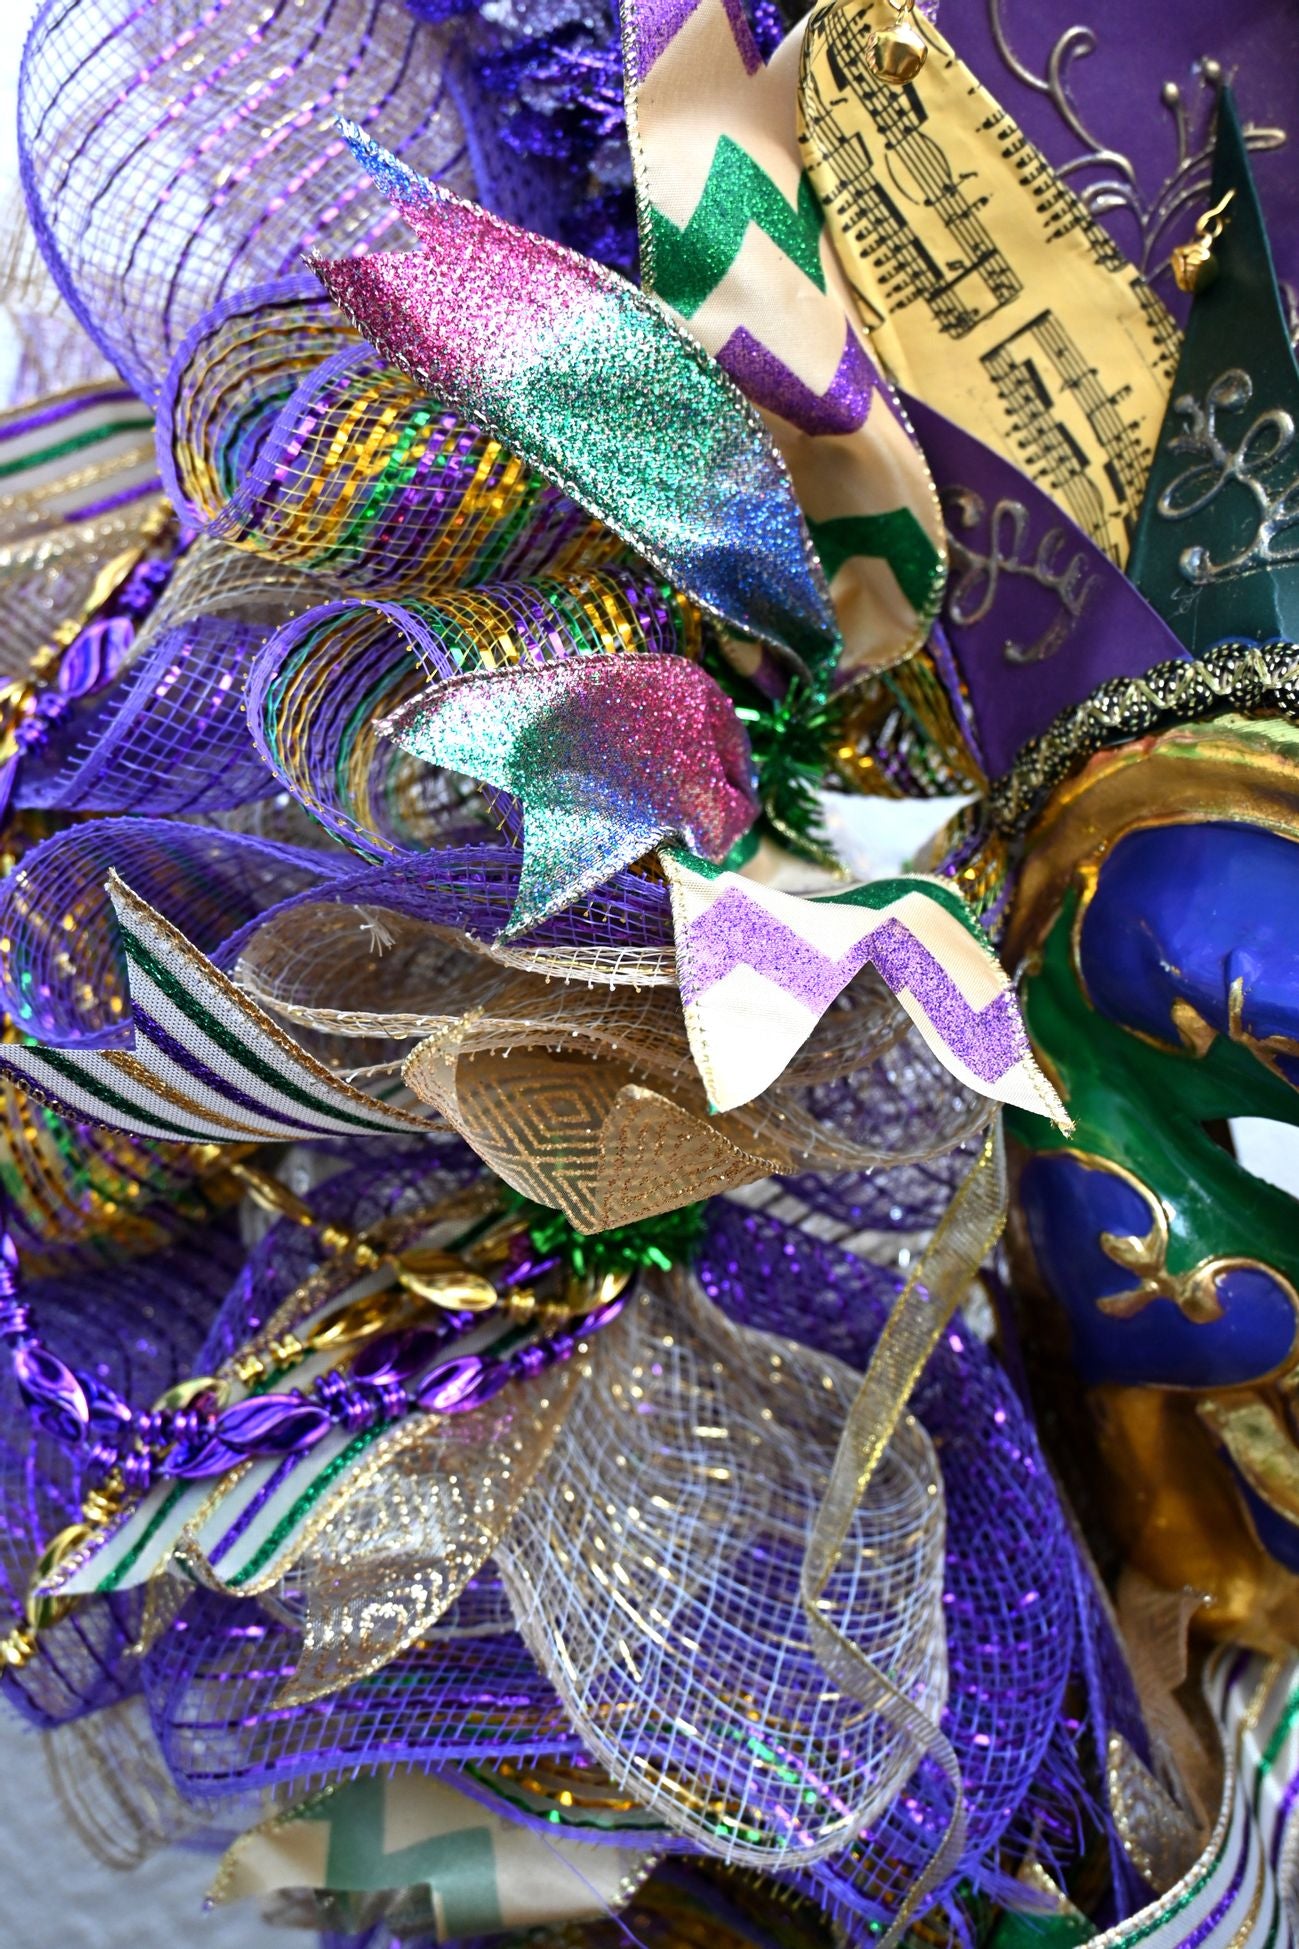 24" Mardi Gras Masquerade Wreath - Masquerade Mask Wreath